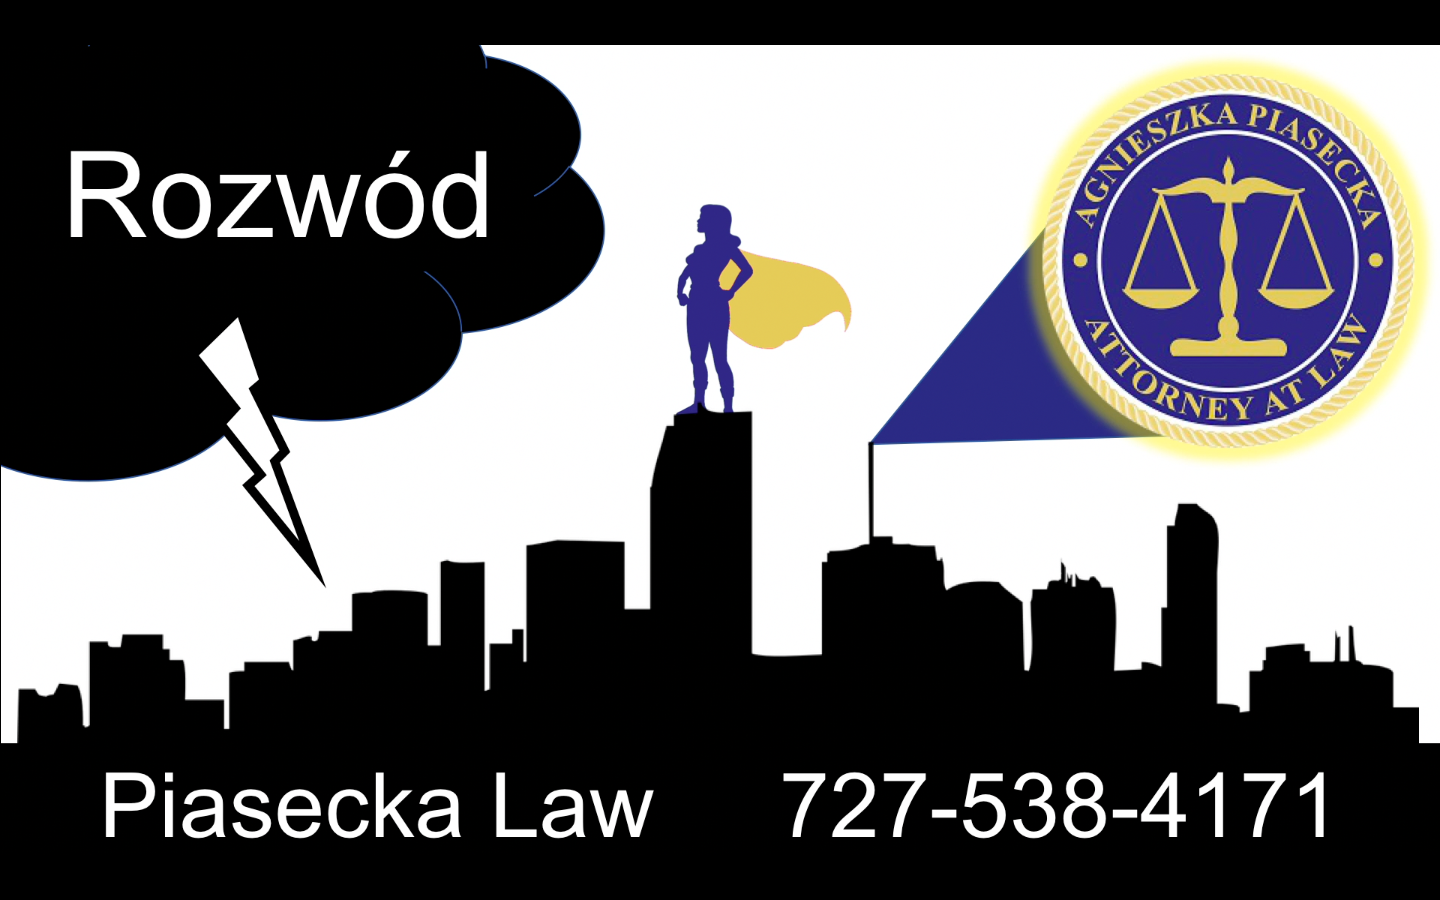 Divorce Clearwater 727-538-4171 Agnieszka Piasecka Law Rozwód Floryda 727-538-4171 Piasecka Law